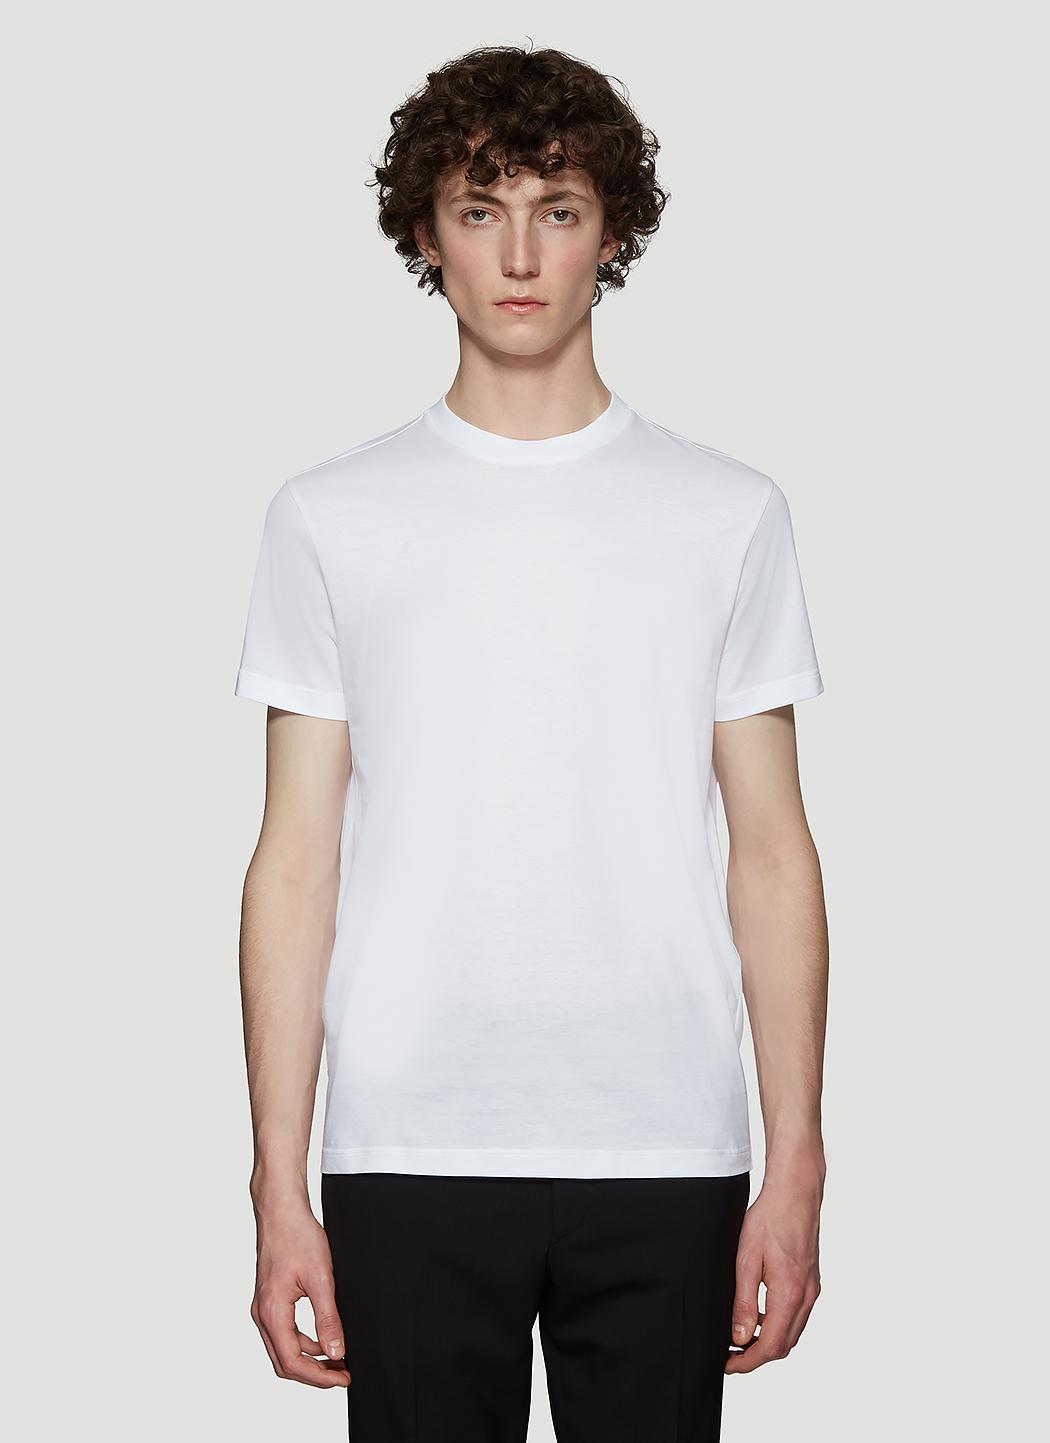 Prada Cotton 3 Pack Classic T-shirt In White for Men - Lyst